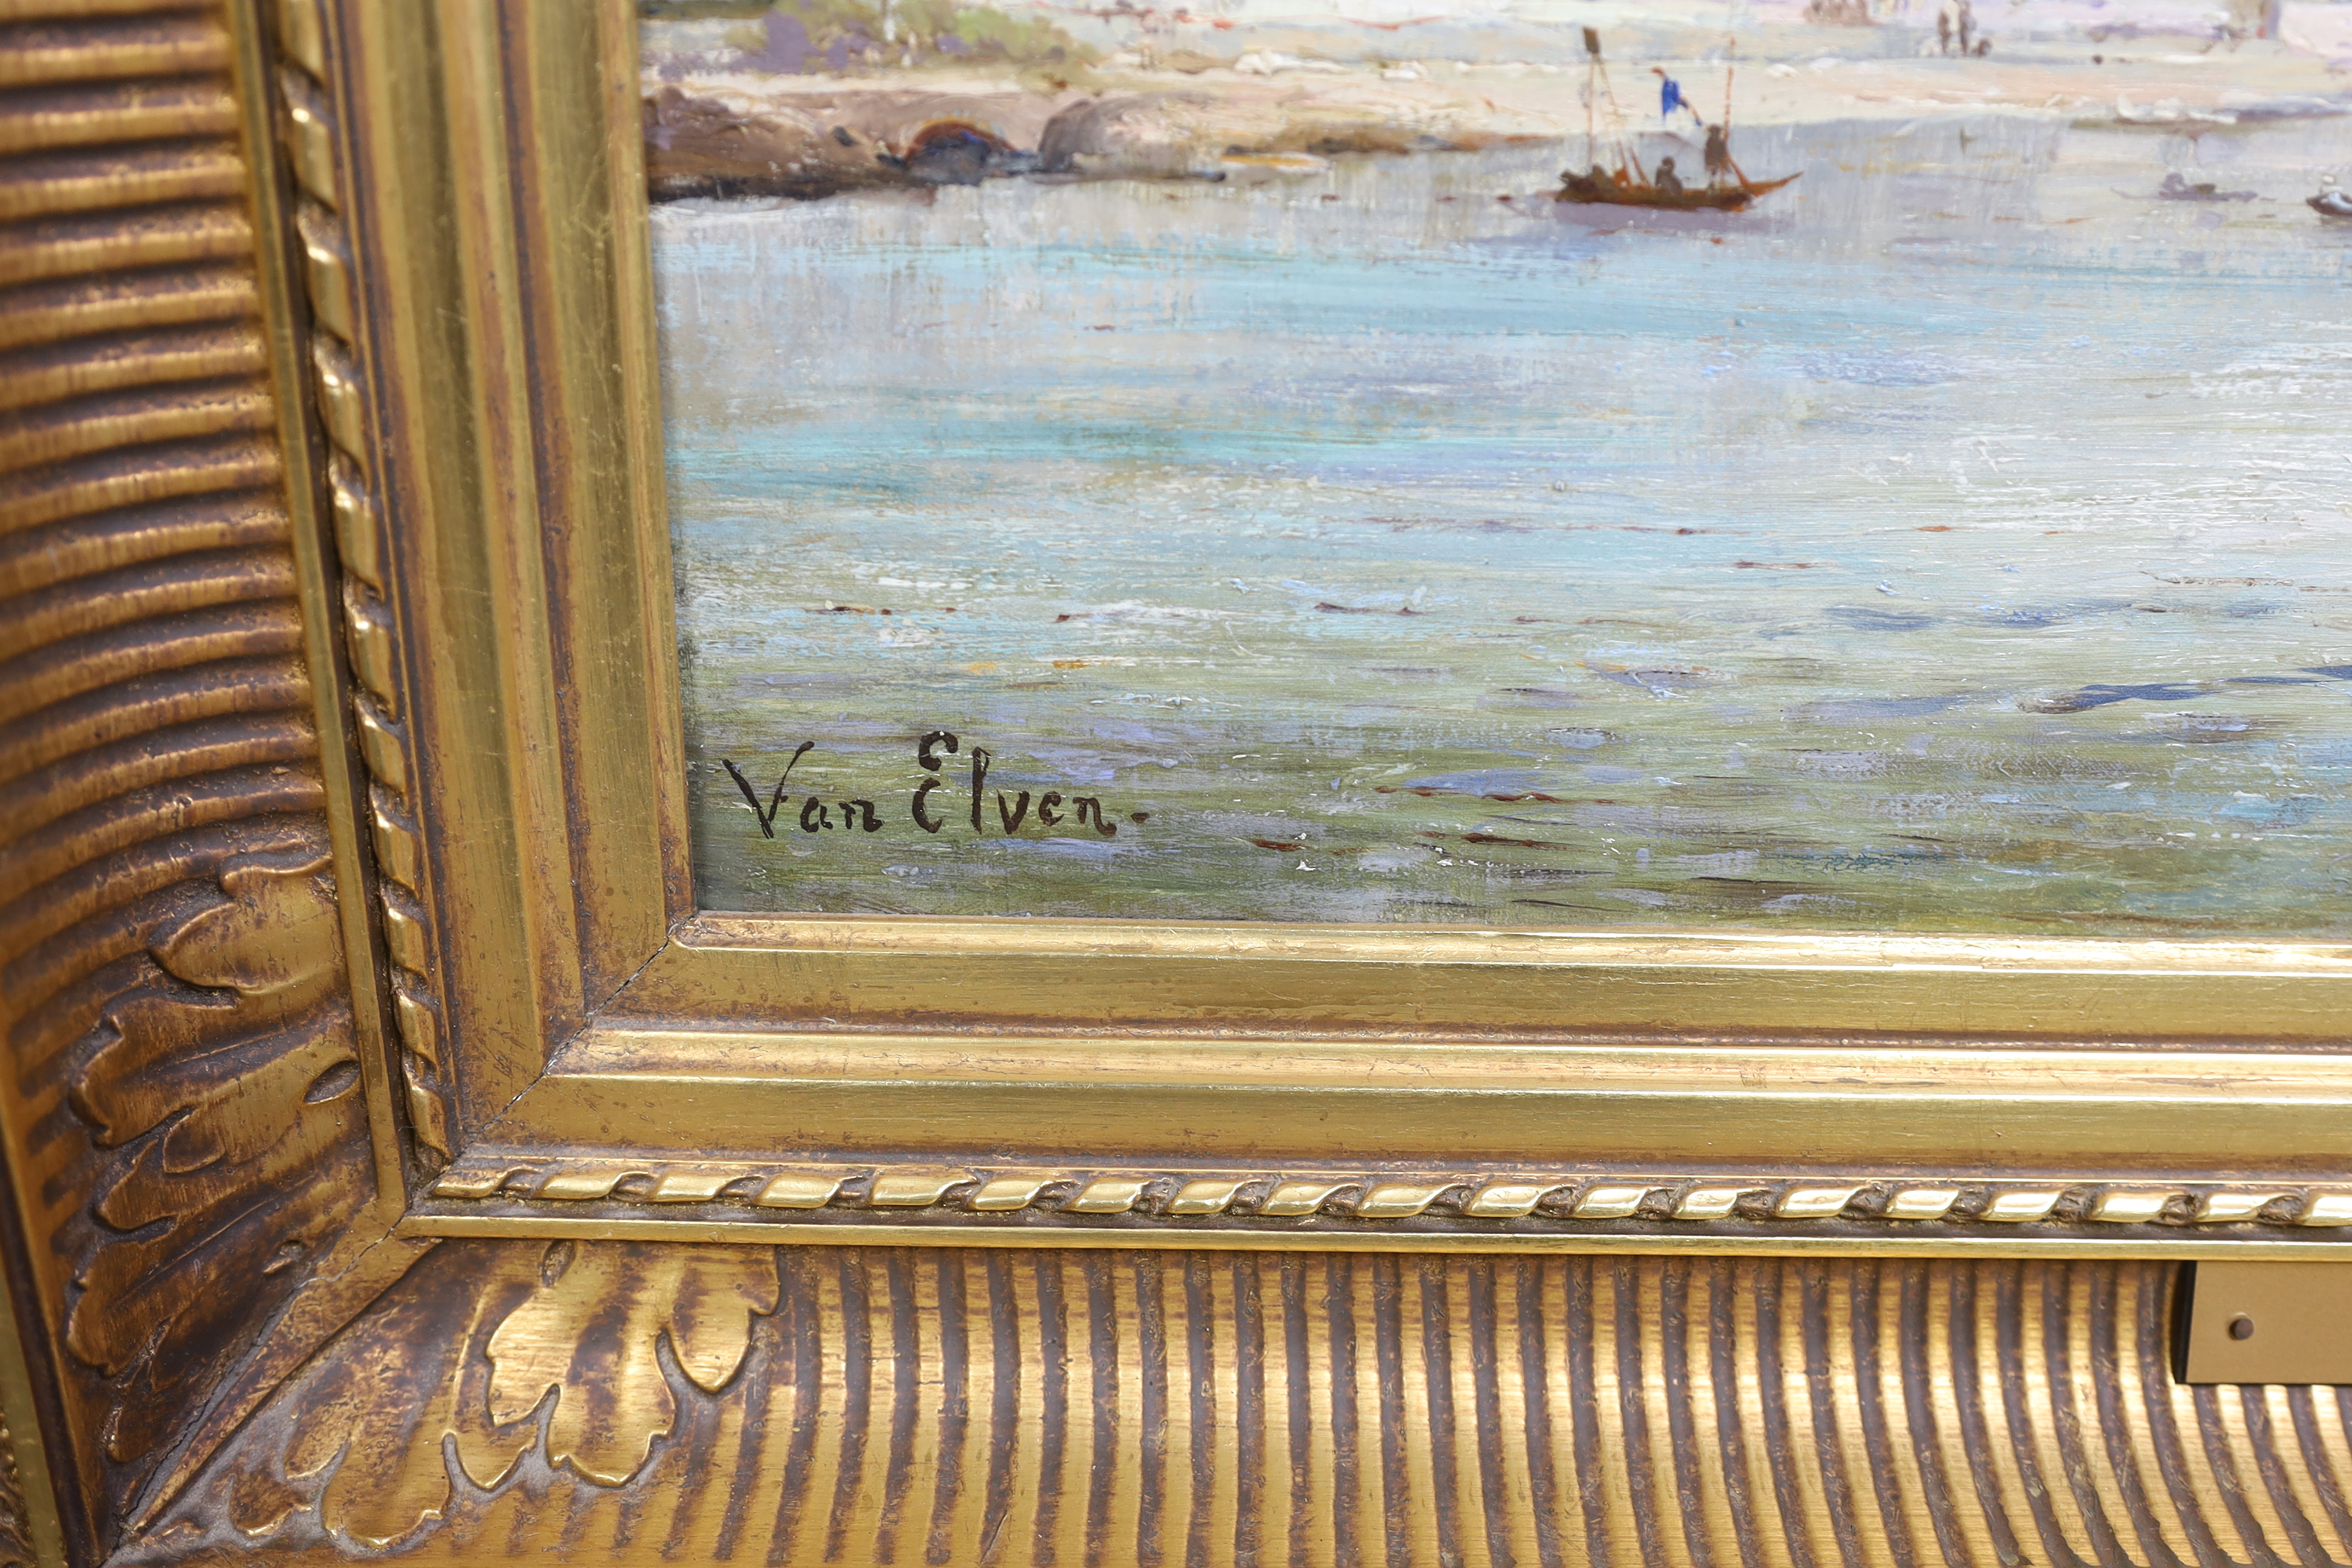 Pierre Henri Théodore Tetar Van Elven (Dutch/French, 1828-1908), View of Cannes, oil on canvas, 39 x 52cm